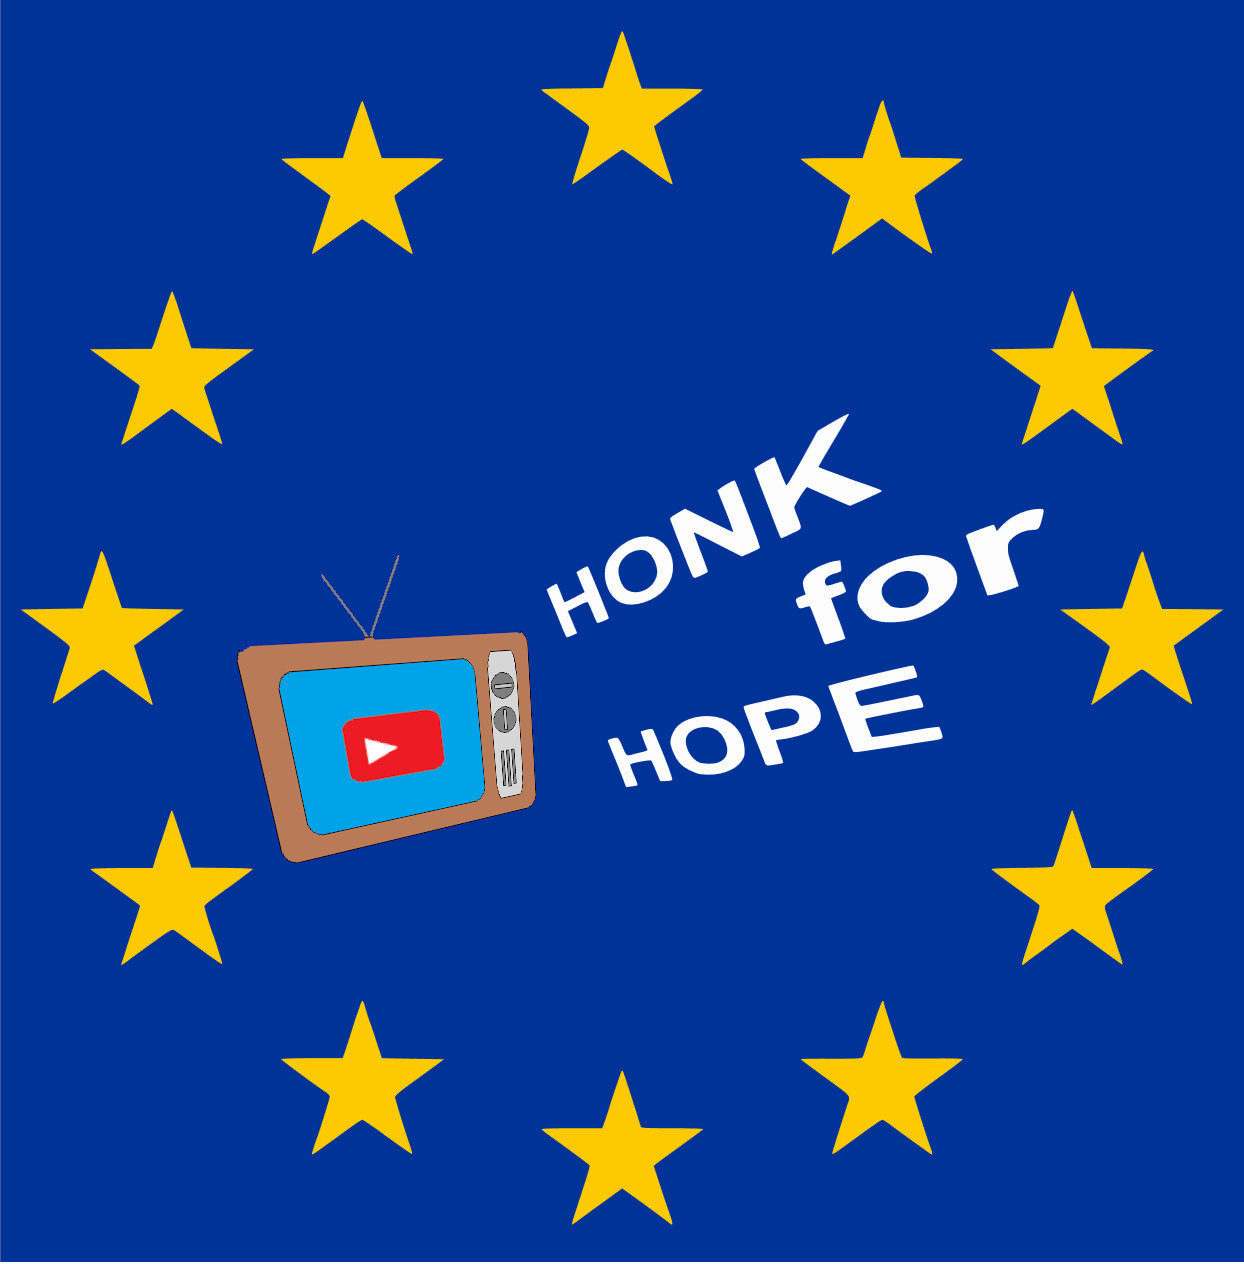 motorcoach travel association #honkforhope on YouTube